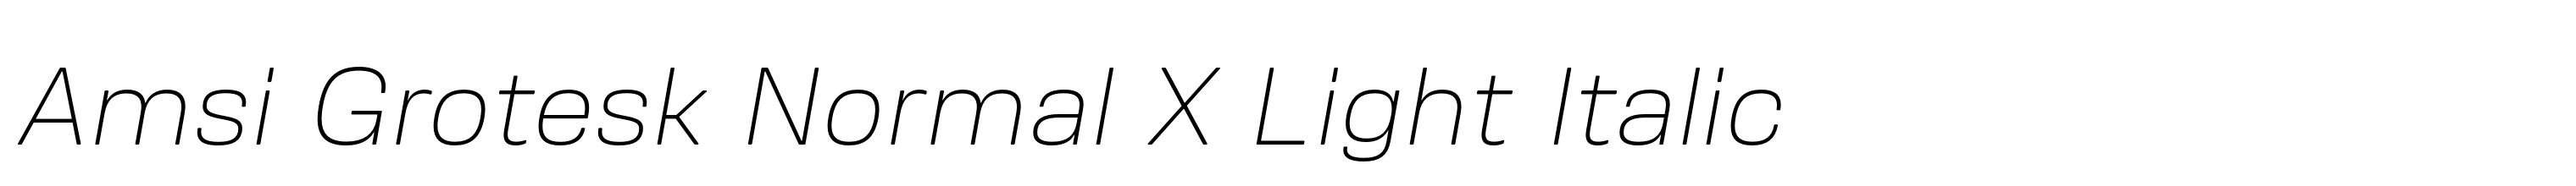 Amsi Grotesk Normal X Light Italic